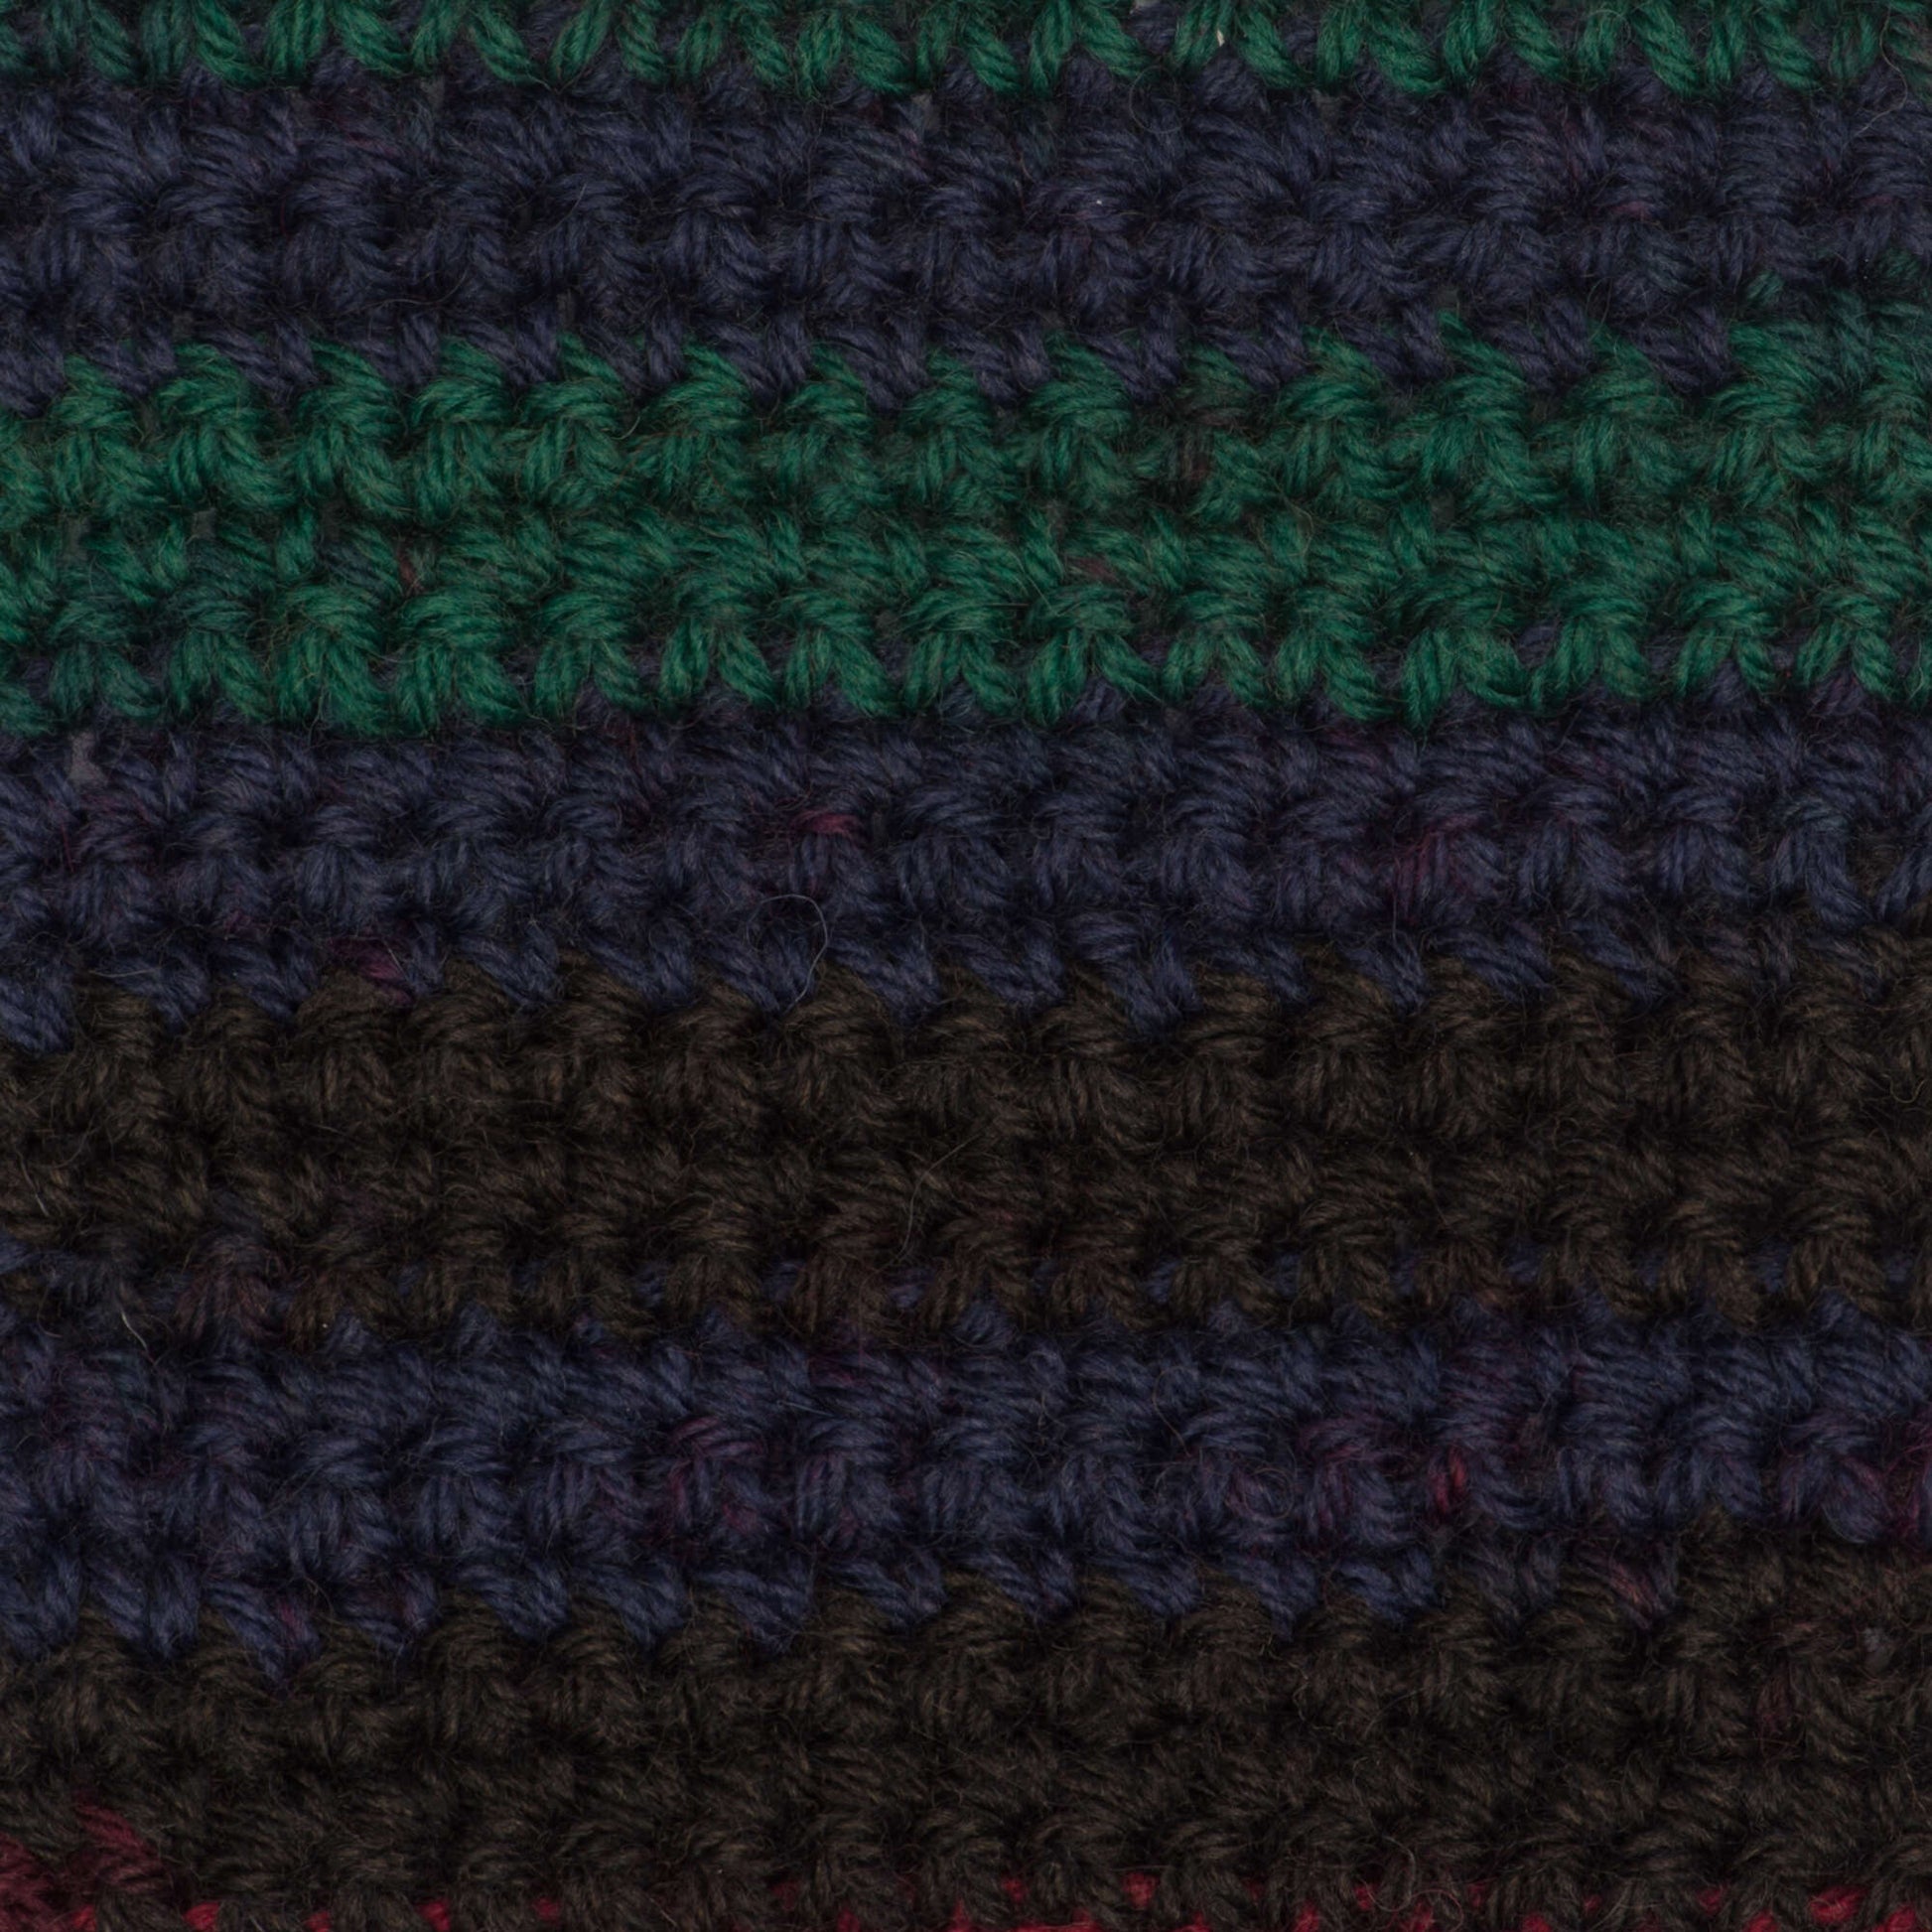 Patons Kroy Socks Yarn - Discontinued Shades Rainbow Stripes